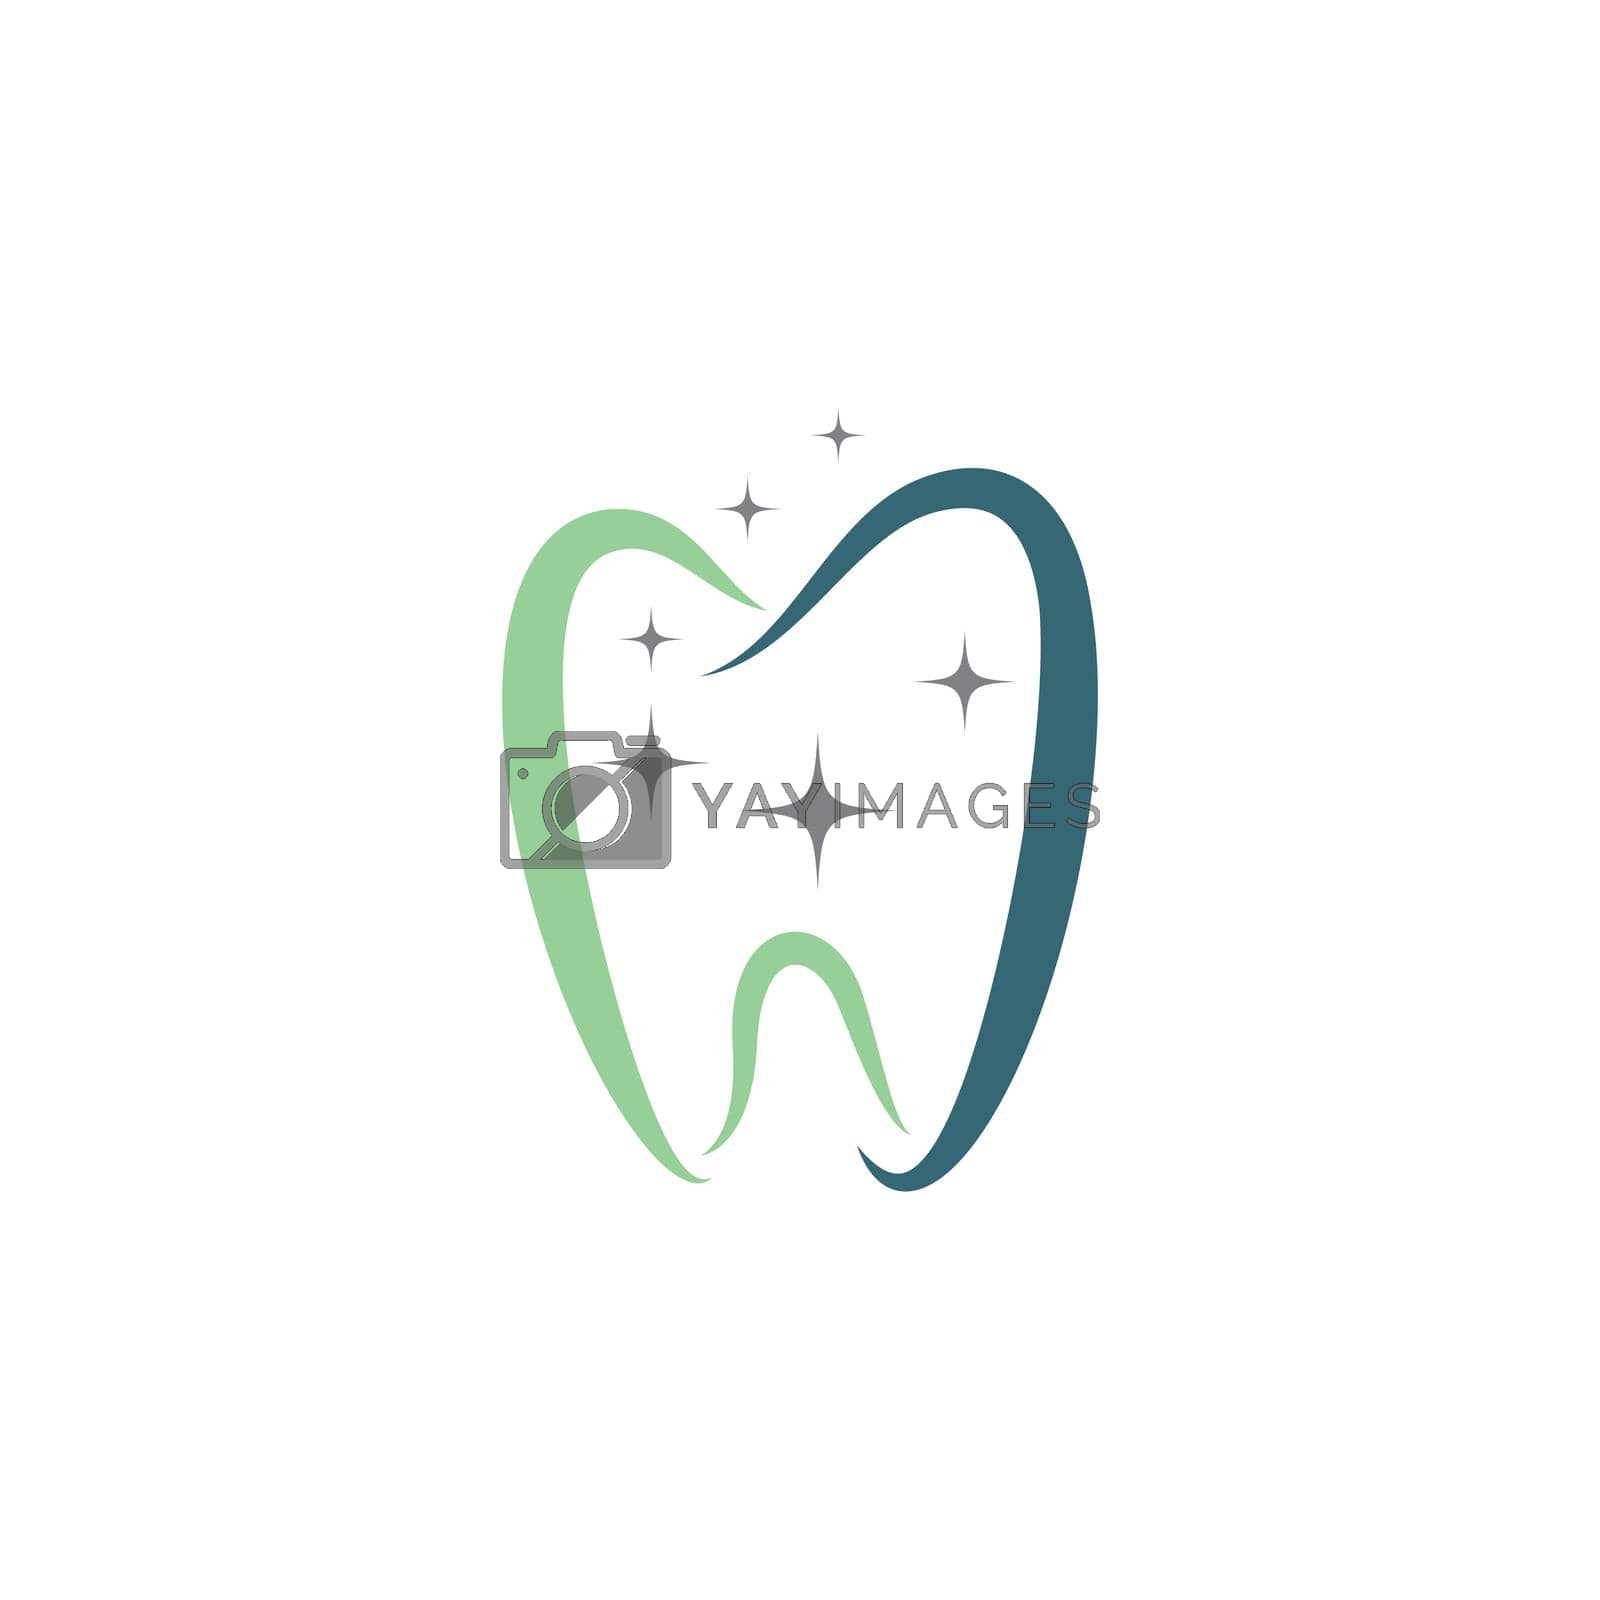 Dental logo vector icon illustration design